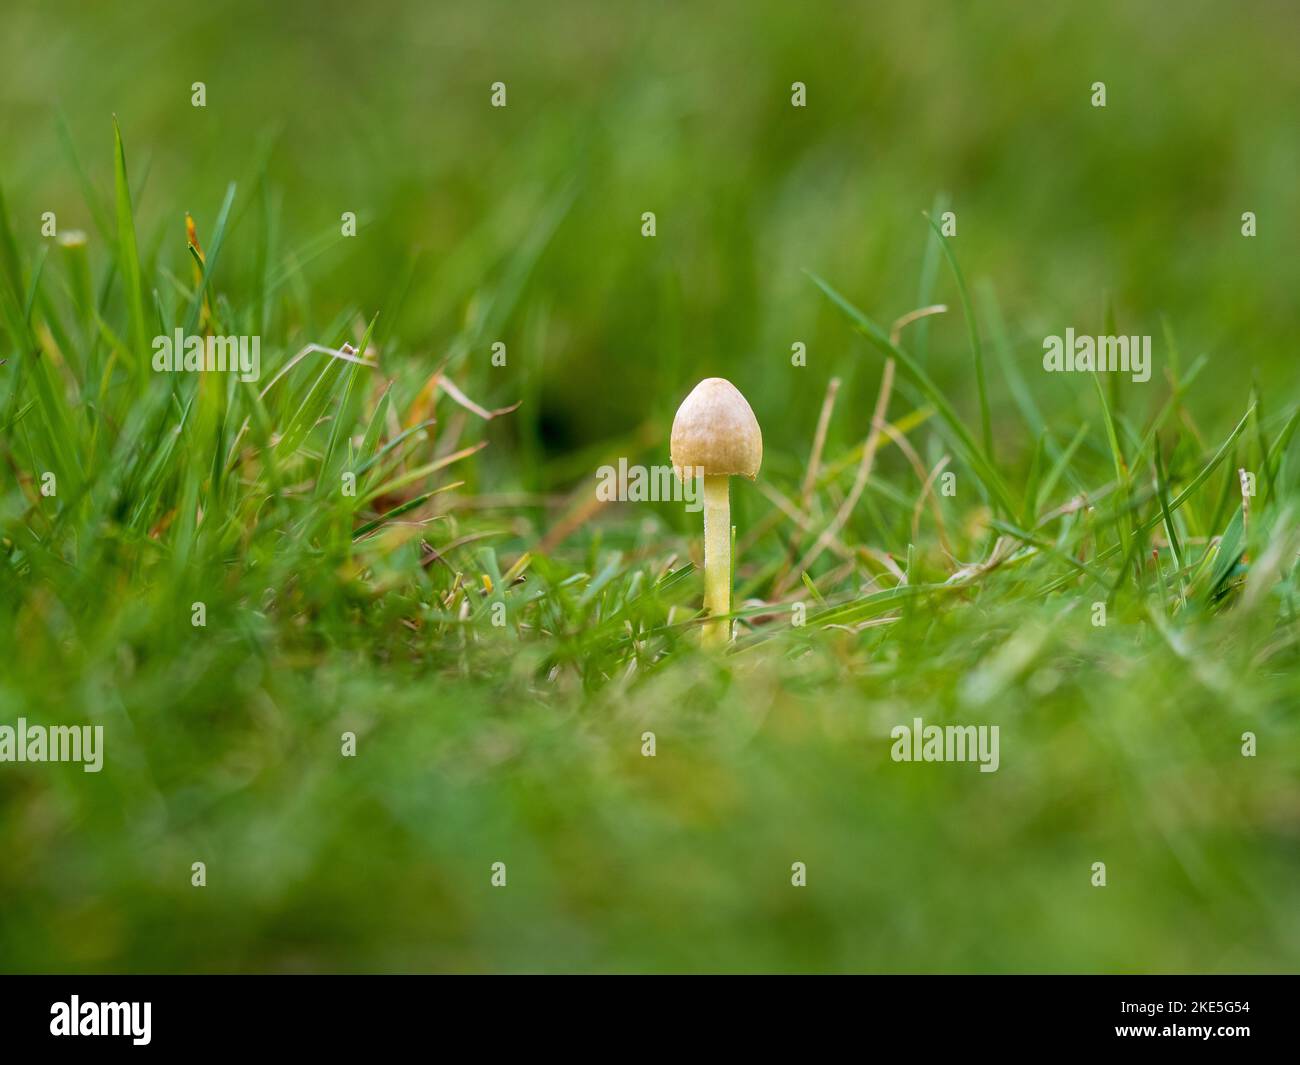 Yellow Fungi in Grass Stock Photo